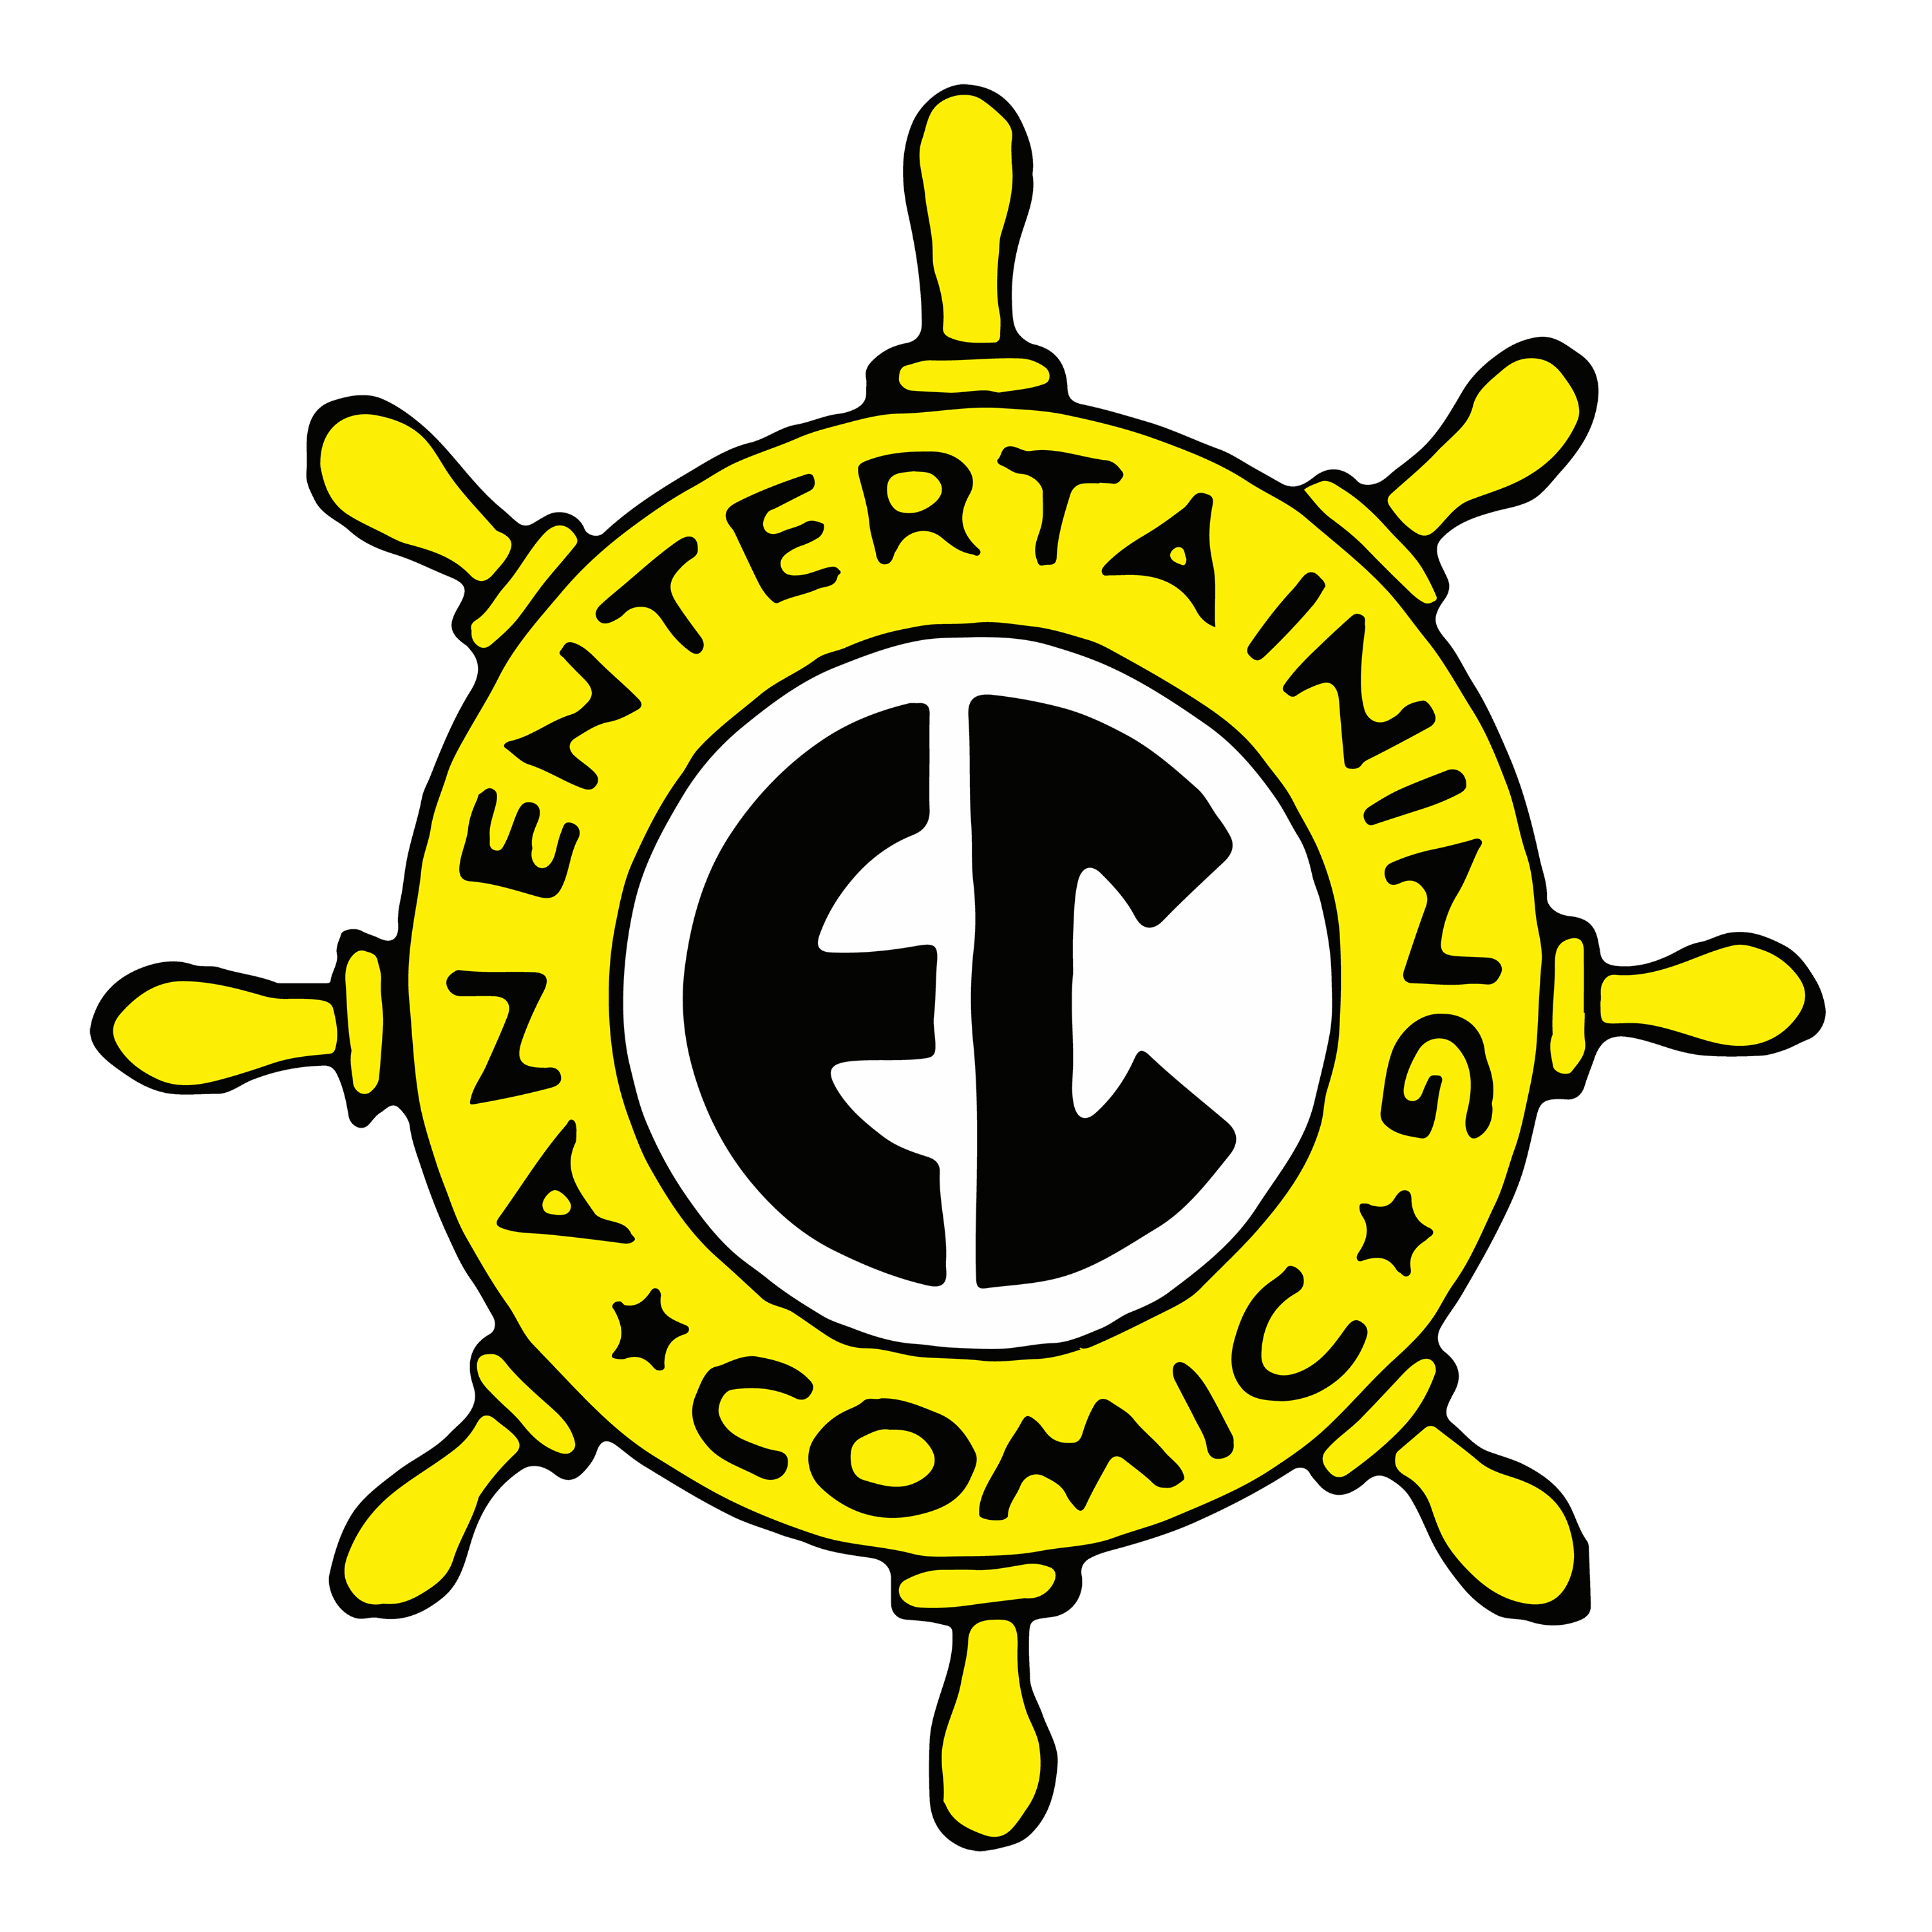 Piracy Logo - Image - Ec-piracy-logo-fx vector.png | EC Comics Wiki | FANDOM ...